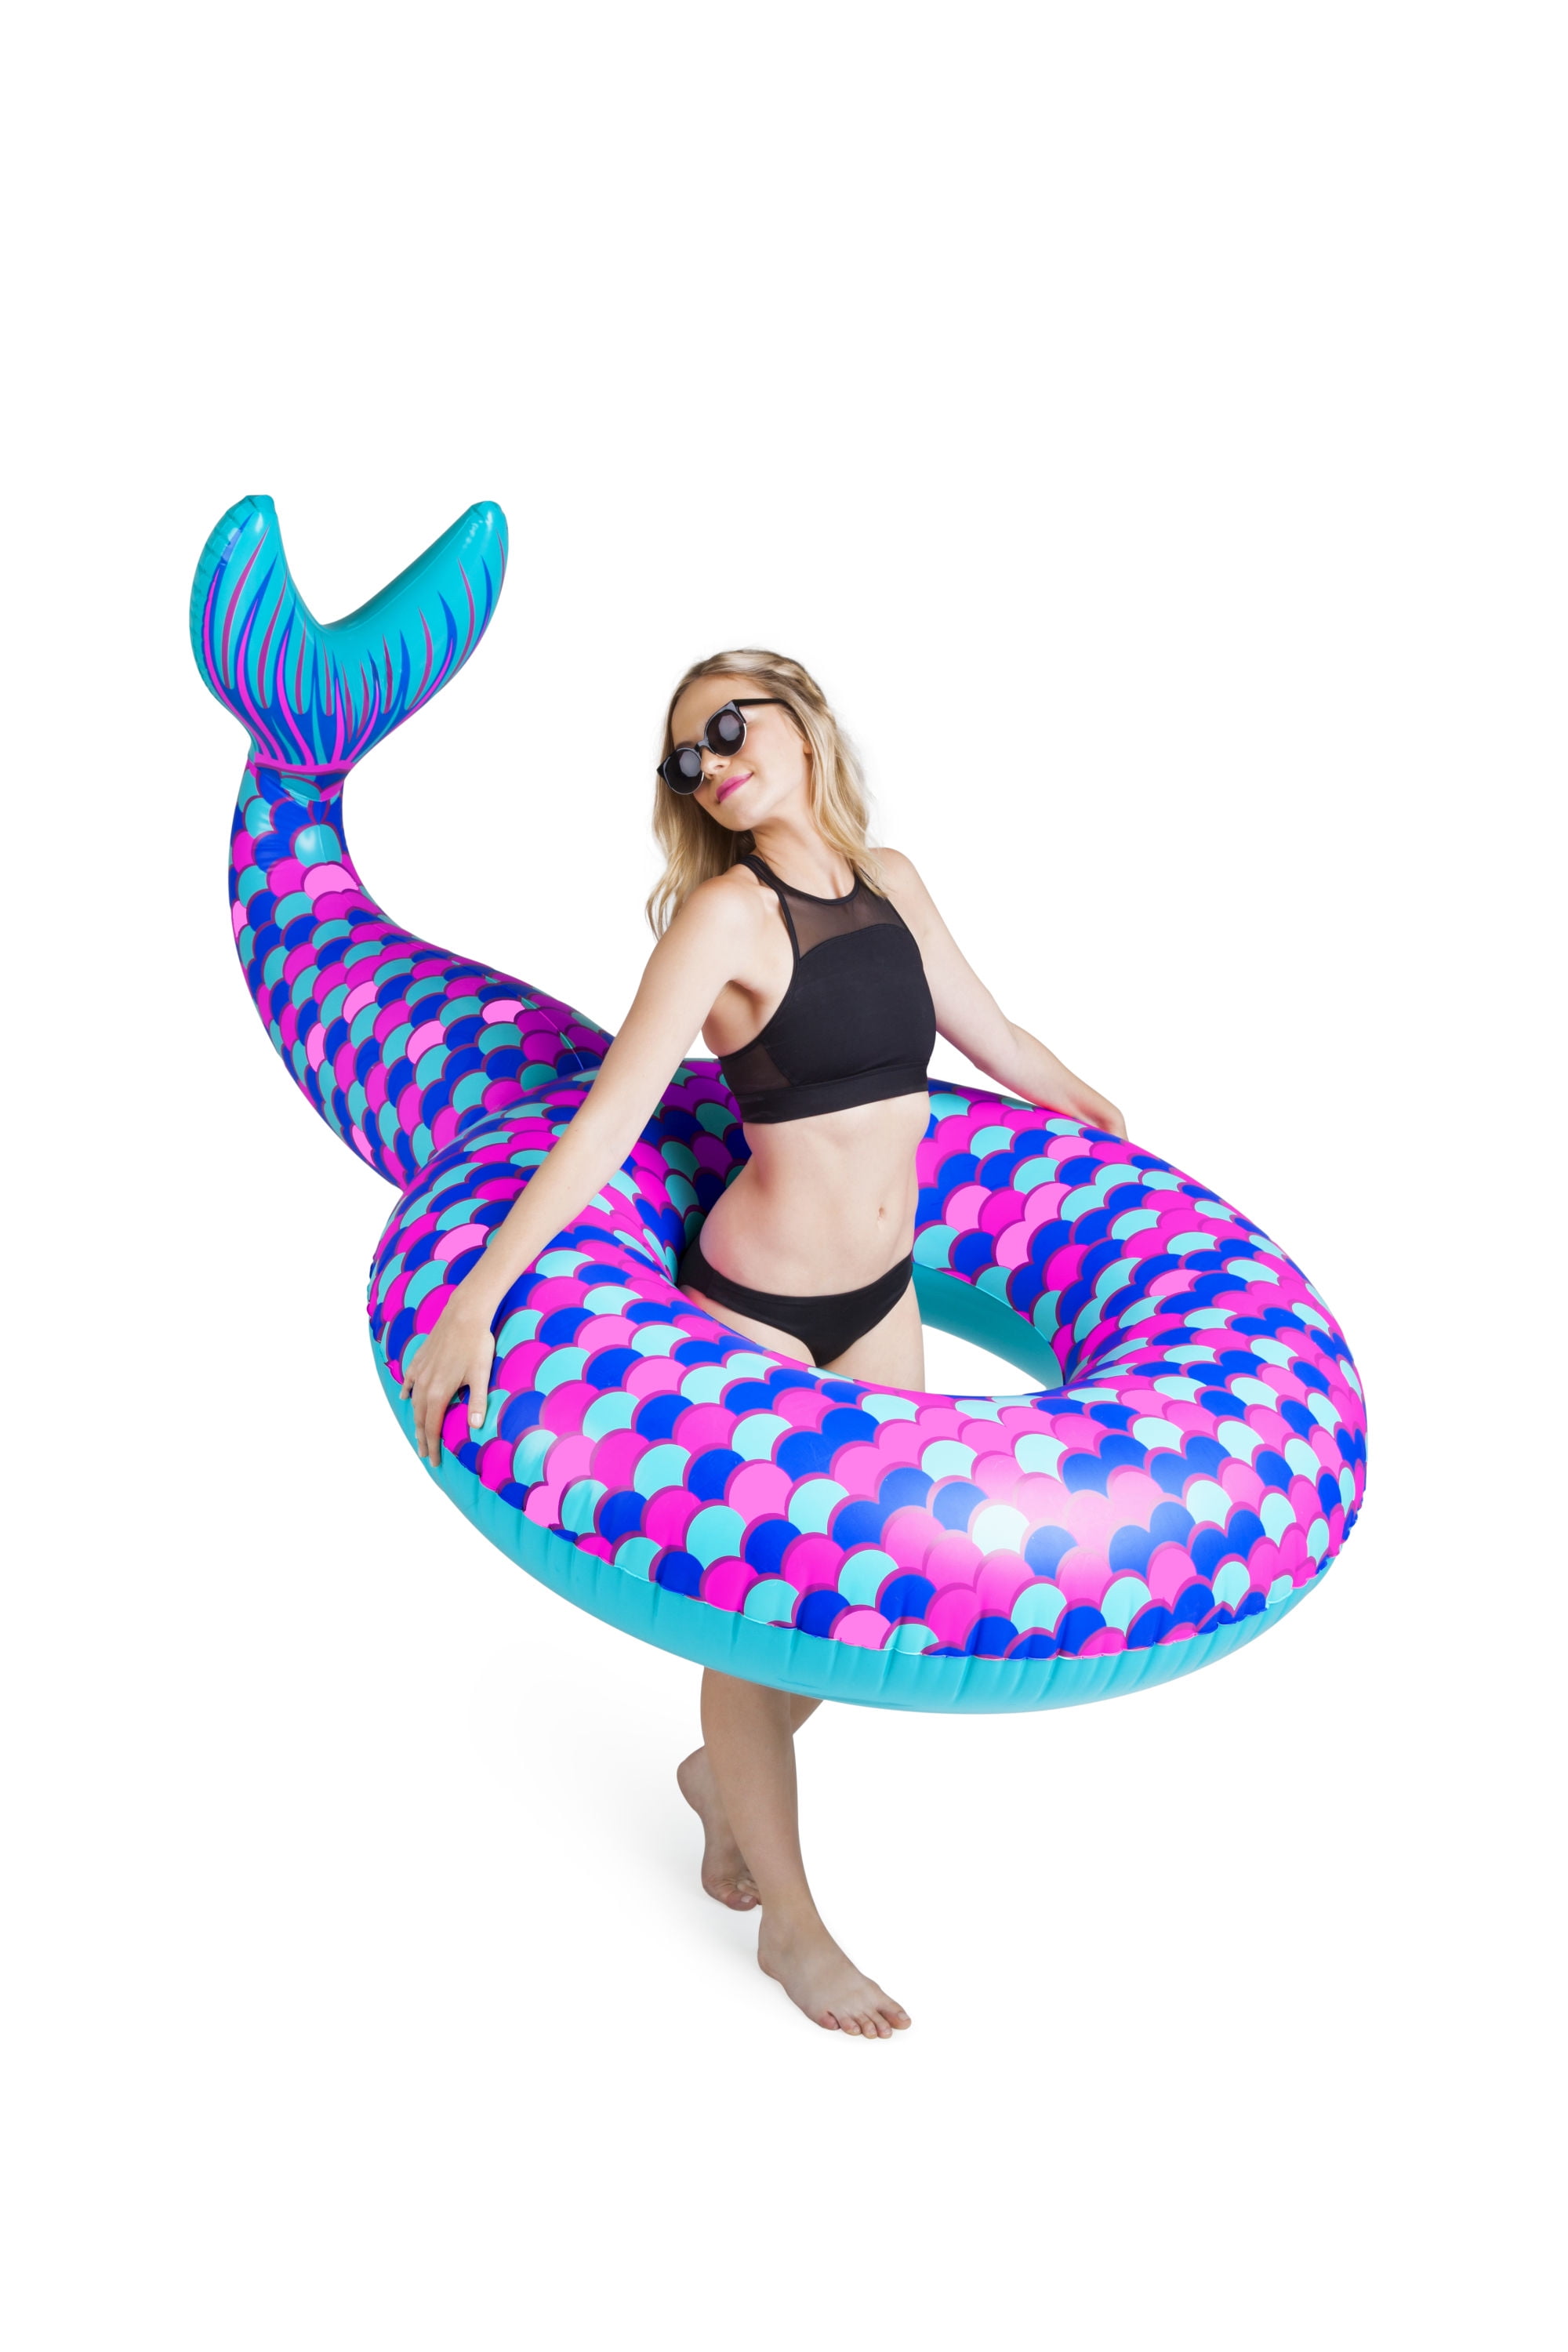 Giant Inflatable 70 Inch Kiwi Slice Mat Swimming Pool Float Lounger Raft Beach 